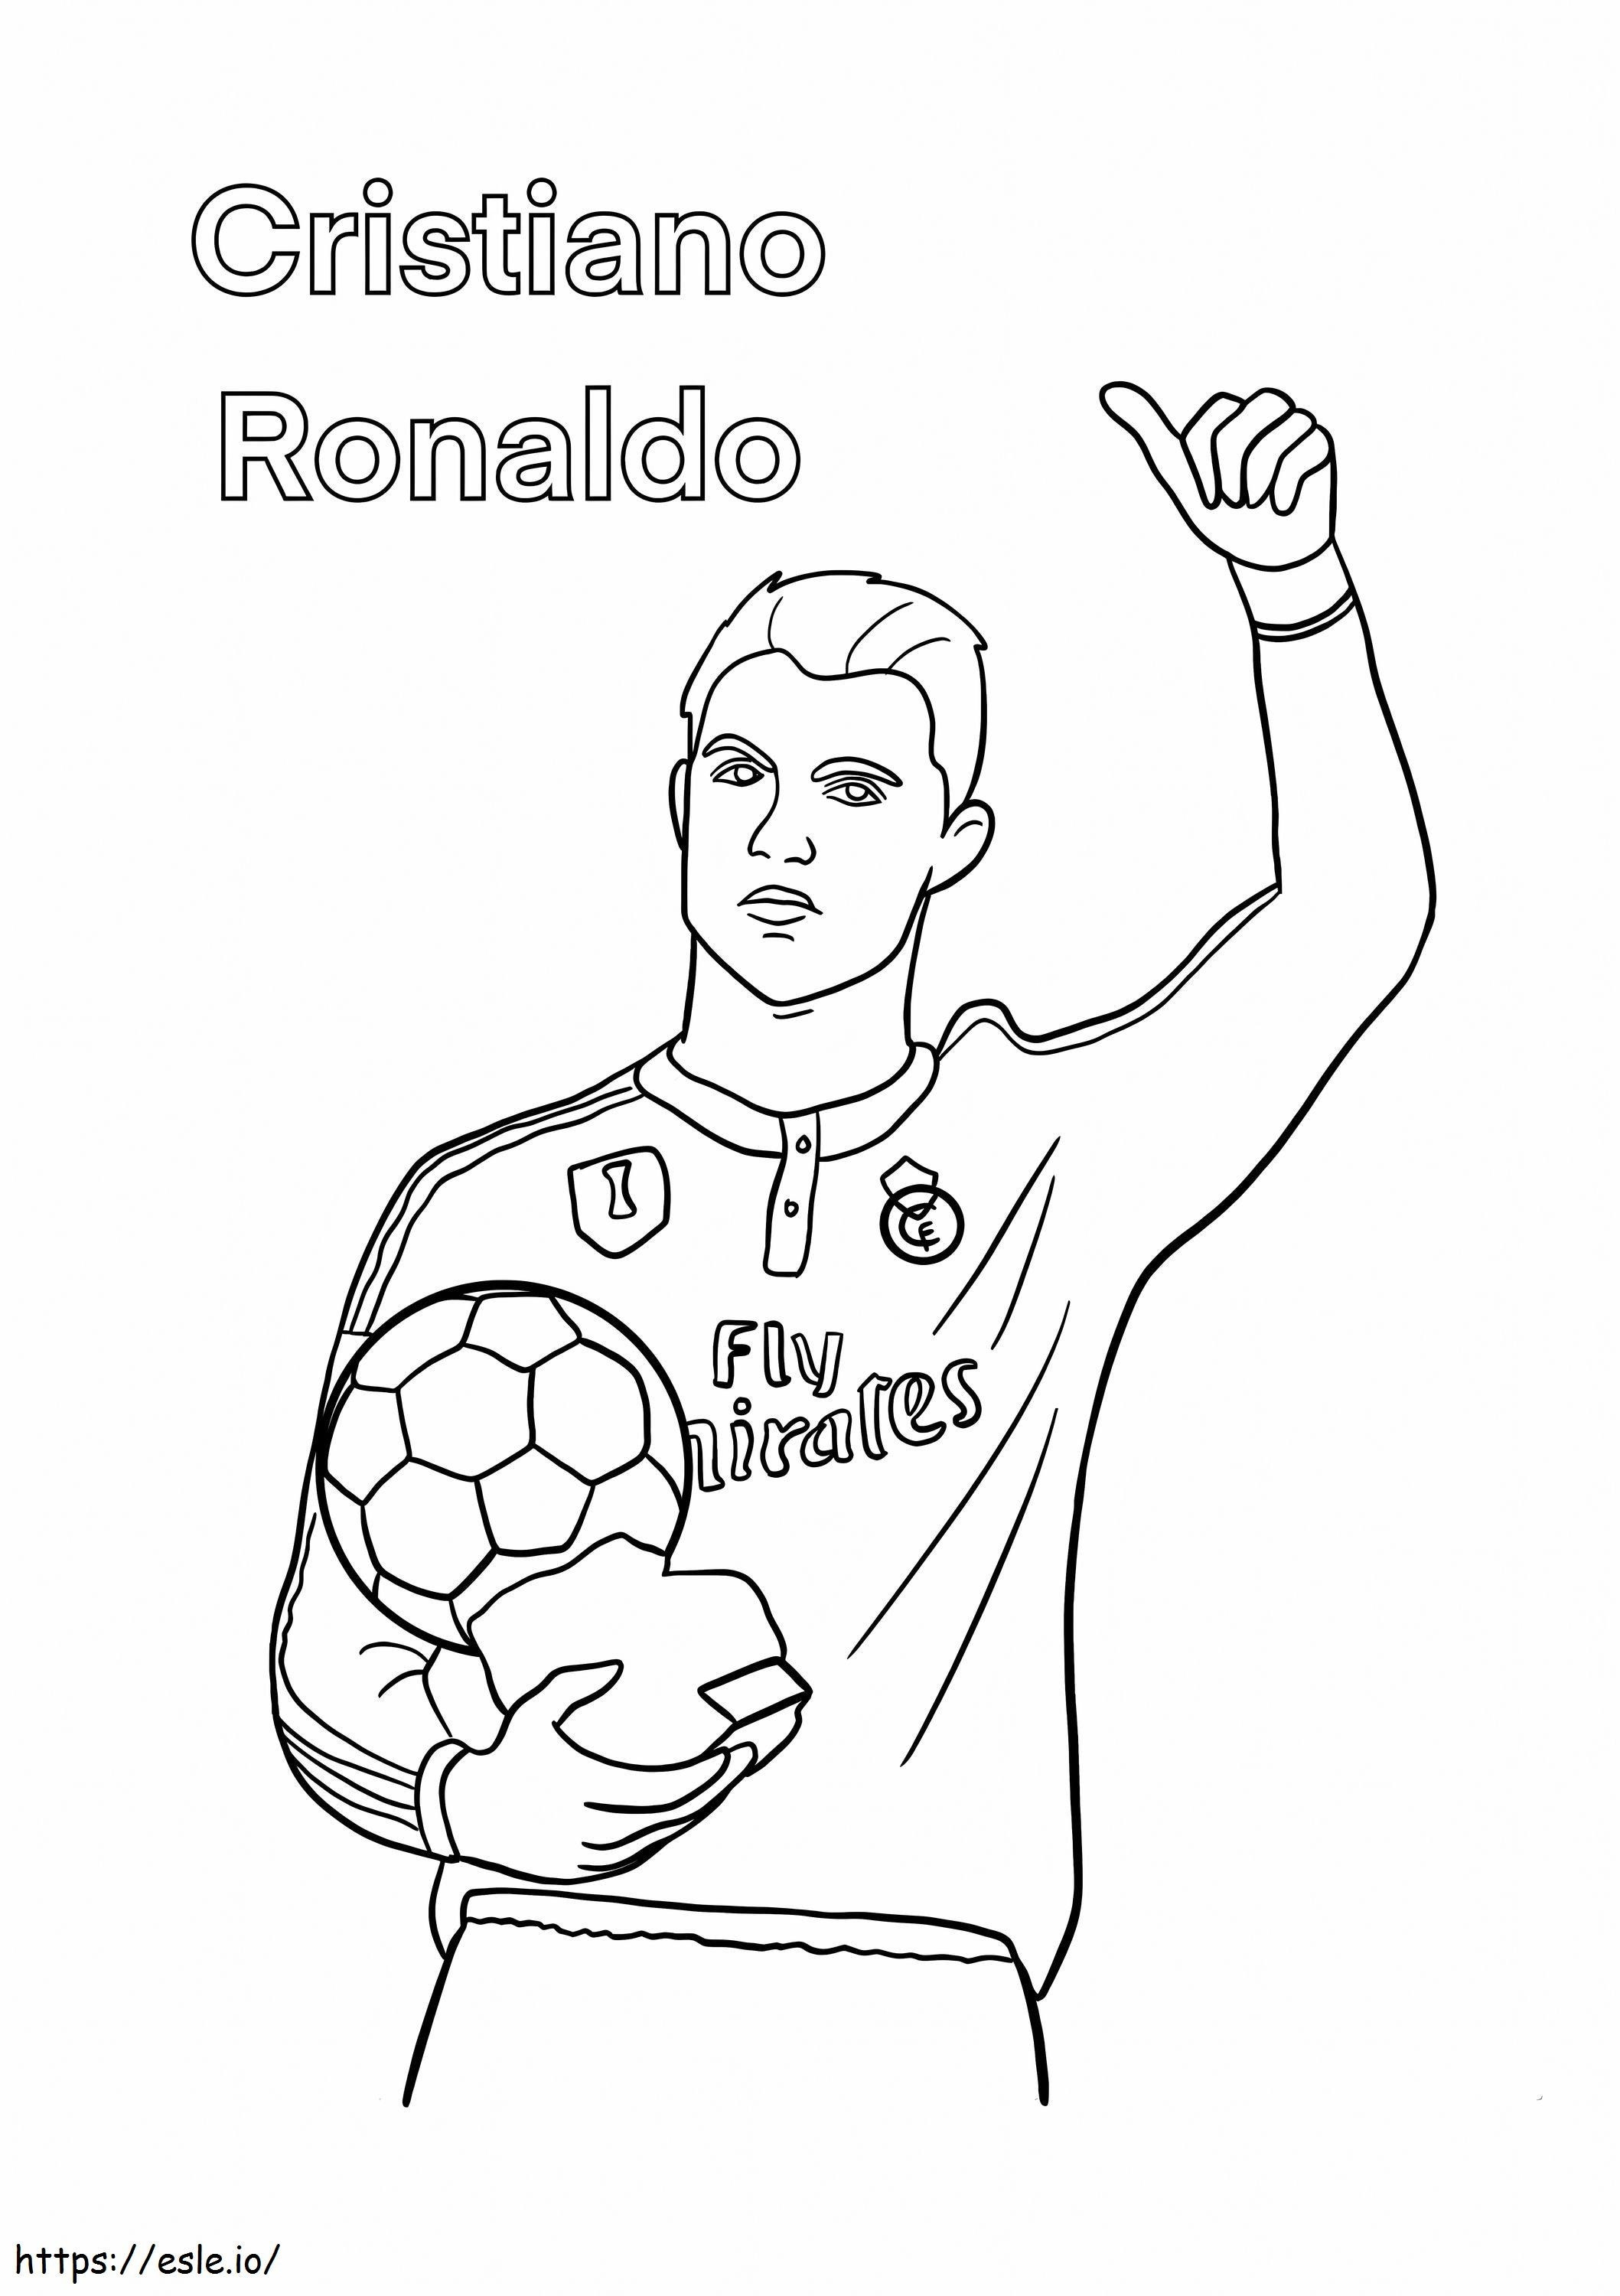 Cristiano Ronaldo As kleurplaat kleurplaat